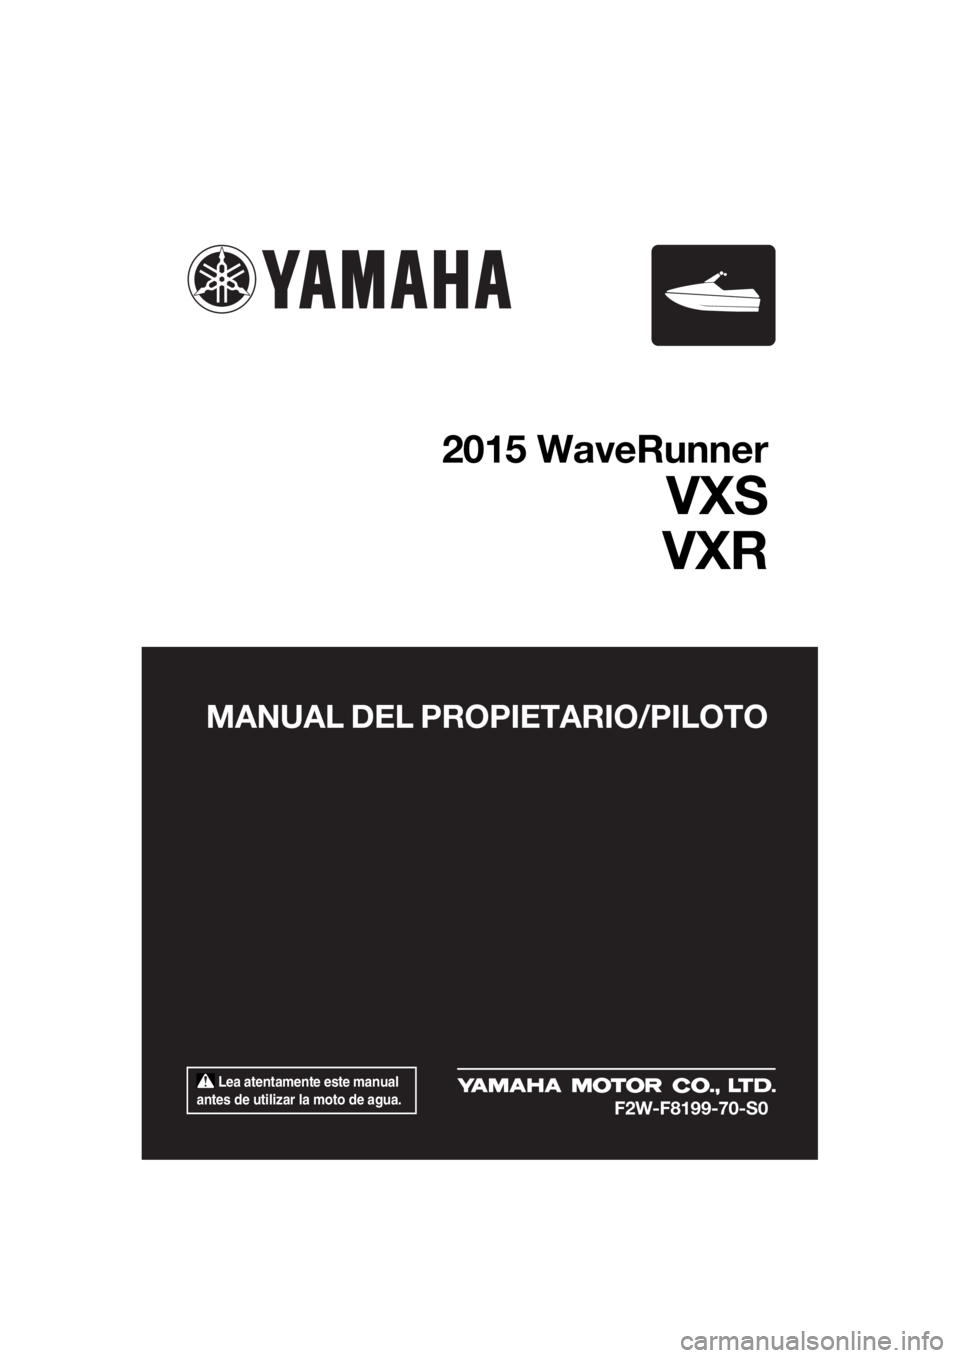 YAMAHA VXR 2015  Manuale de Empleo (in Spanish)  Lea atentamente este manual 
antes de utilizar la moto de agua.
MANUAL DEL PROPIETARIO/PILOTO
2015 WaveRunner
VXS
VXR
F2W-F8199-70-S0
UF2W70S0.book  Page 1  Tuesday, December 8, 2015  1:45 PM 